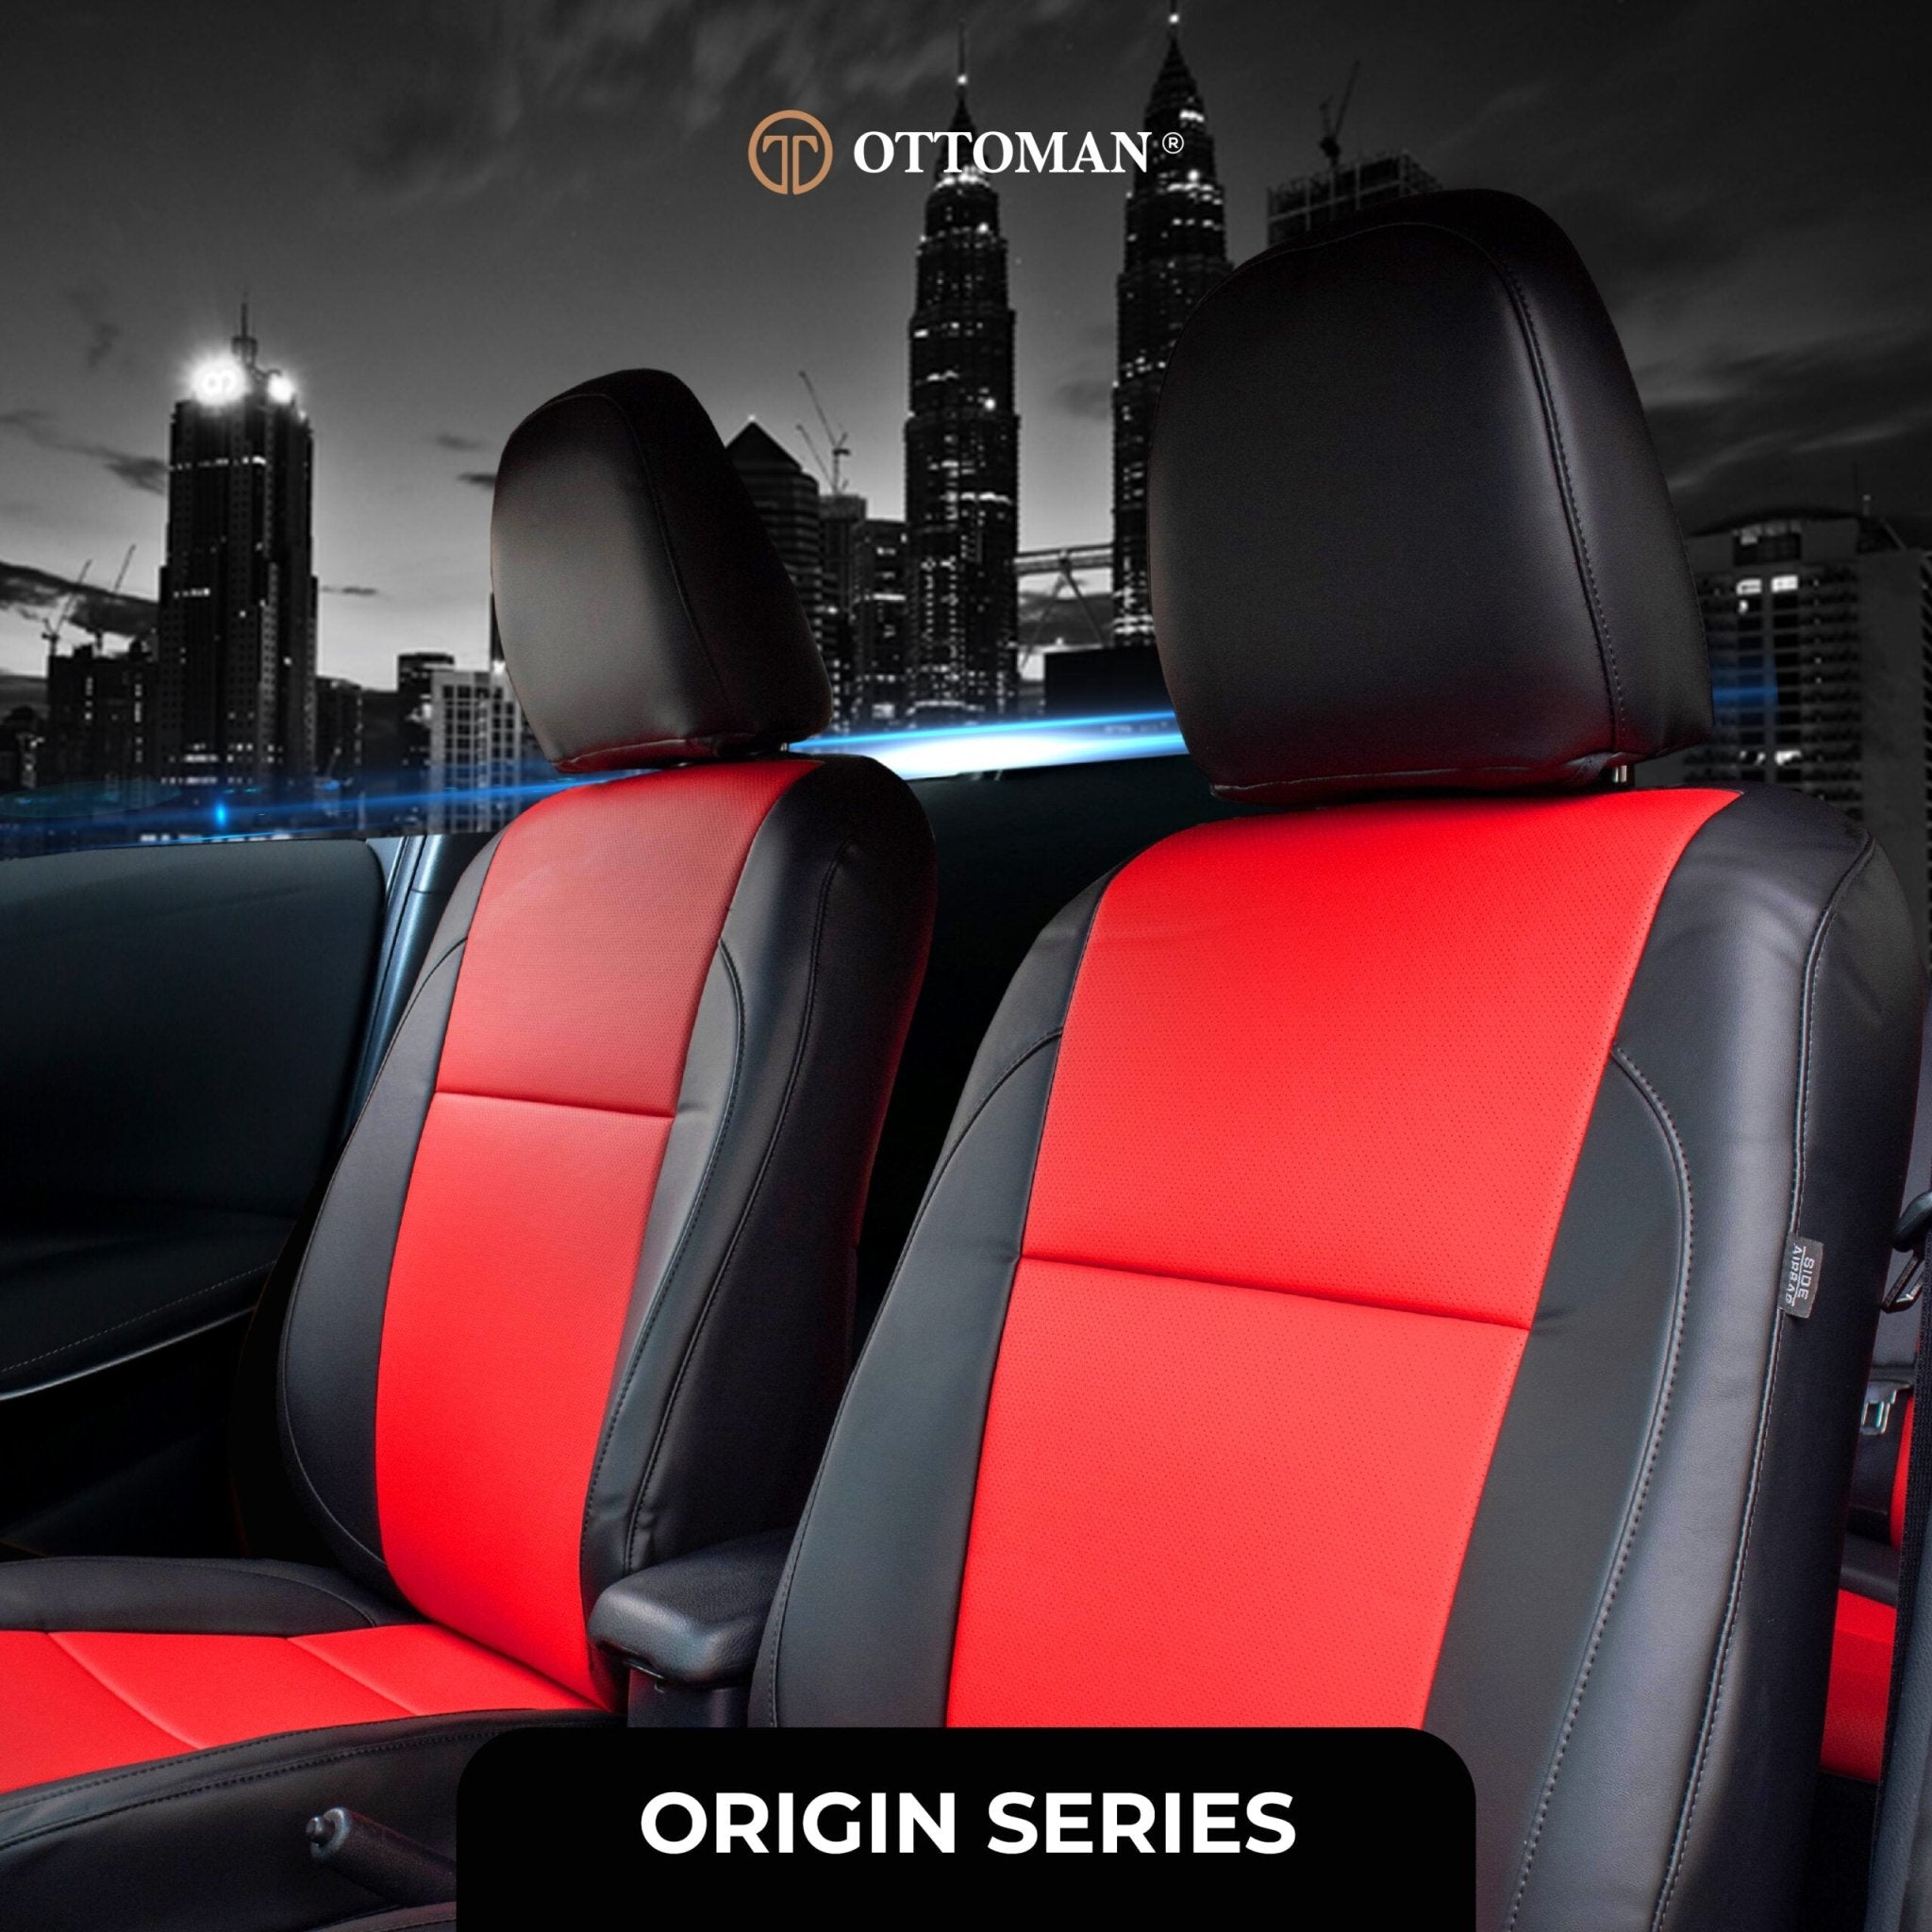 Isuzu D-Max (2012-2020) Ottoman Seat Cover Seat Cover in Klang Selangor, Penang, Johor Bahru - Ottoman Car Mats